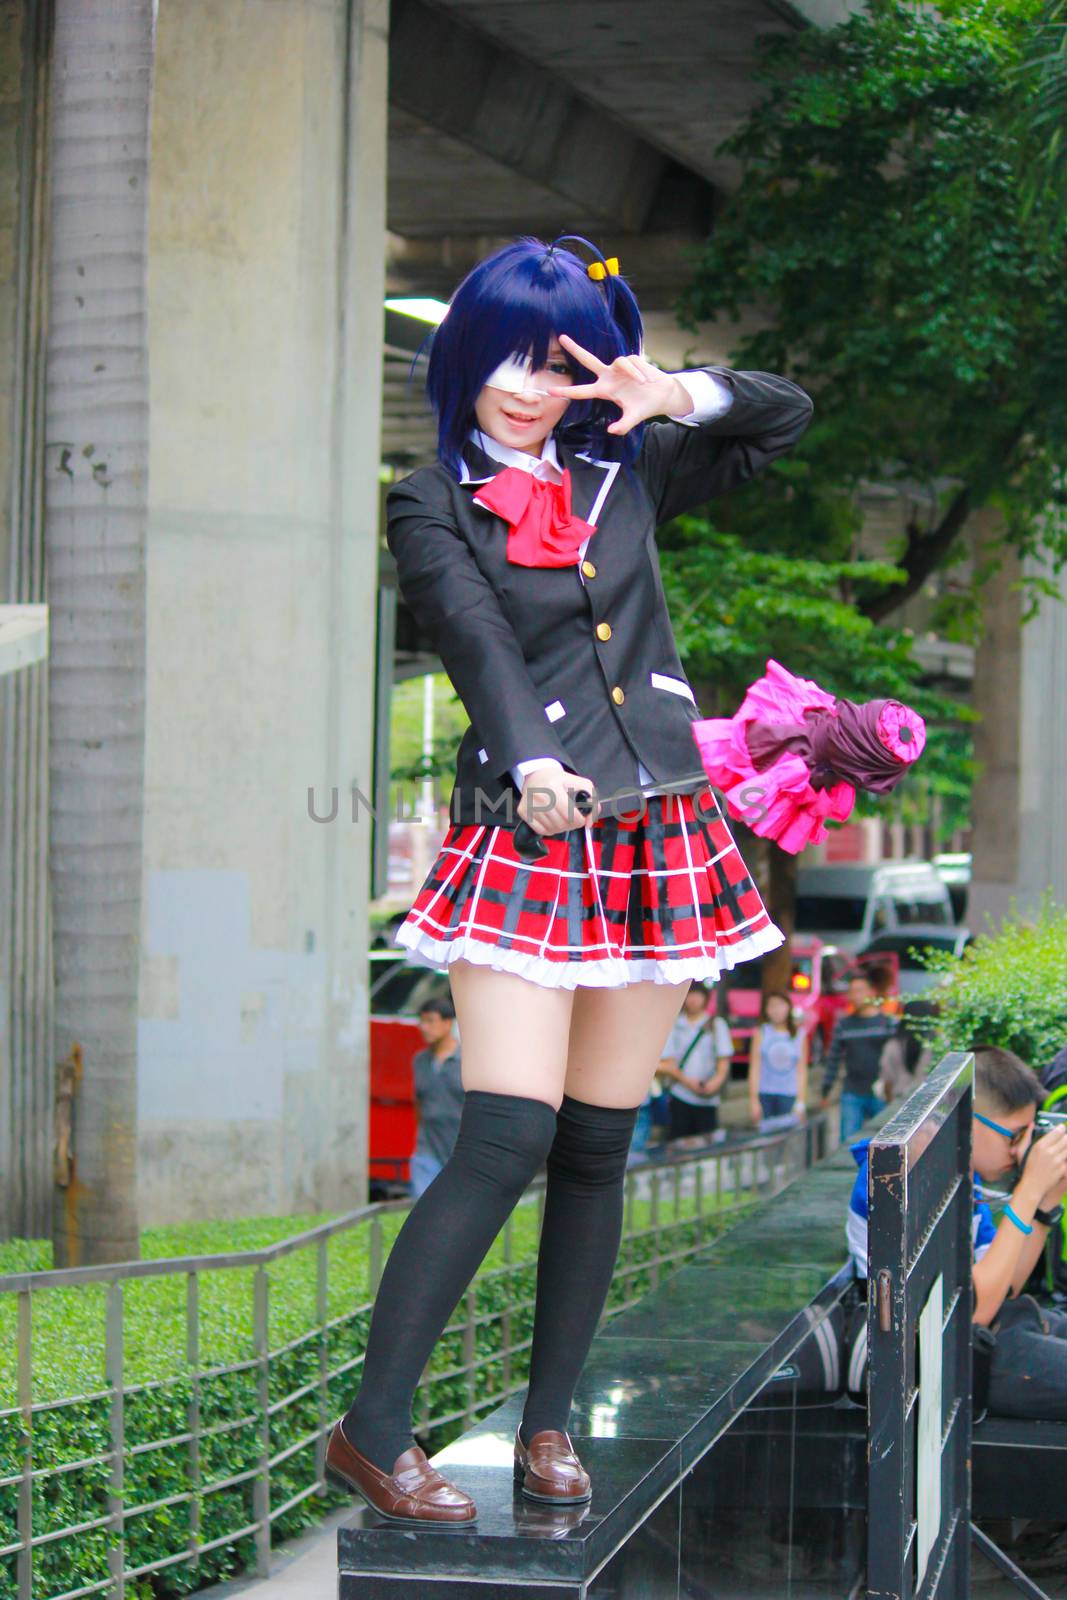 Bangkok - Aug 31: An unidentified Japanese anime cosplay Takanashi Rikka pose  on August 31, 2014 at Central World, Bangkok, Thailand.